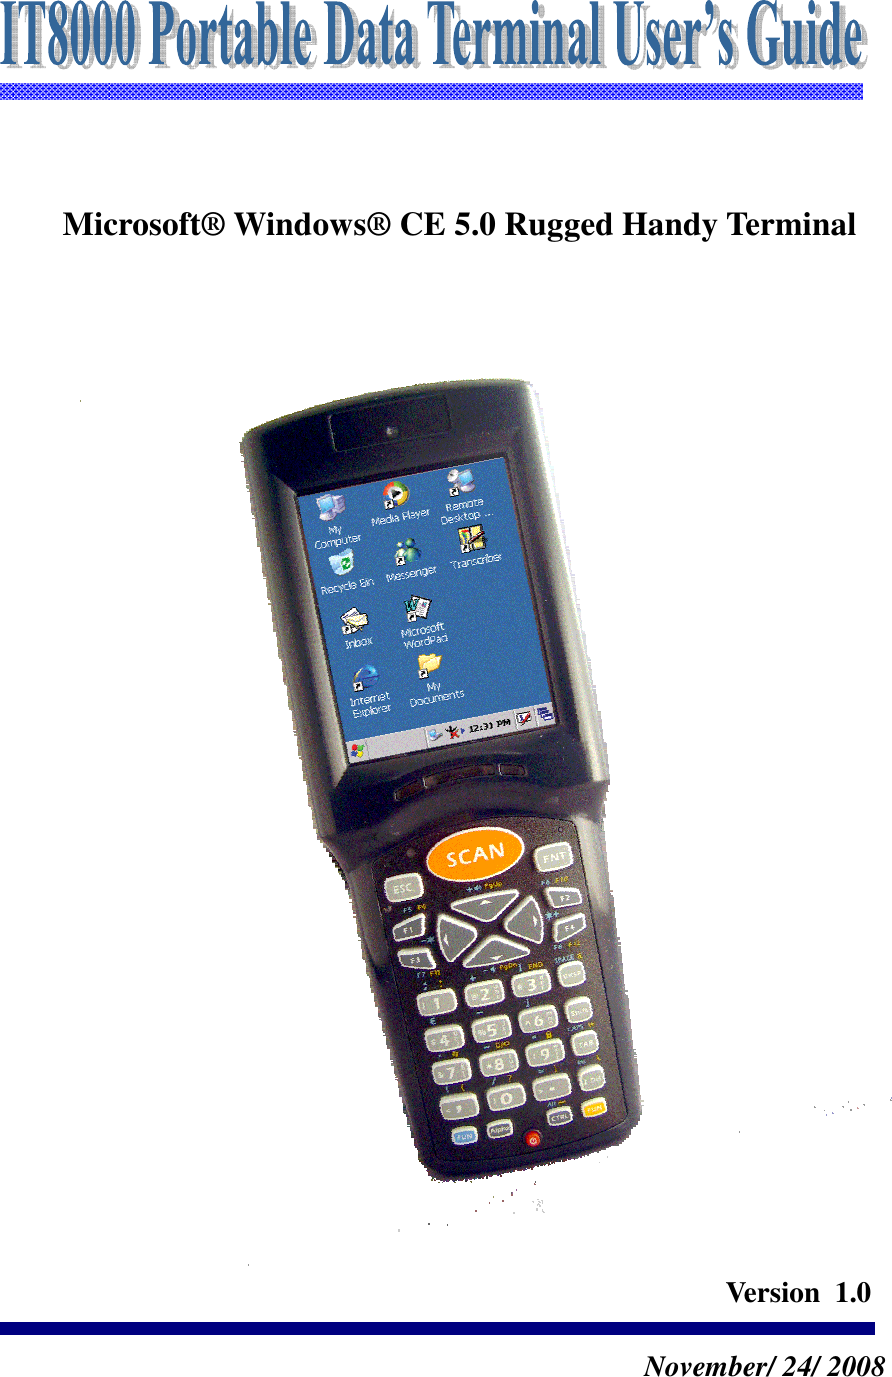      Microsoft® Windows® CE 5.0 Rugged Handy Terminal                            Version  1.0  November/ 24/ 2008 